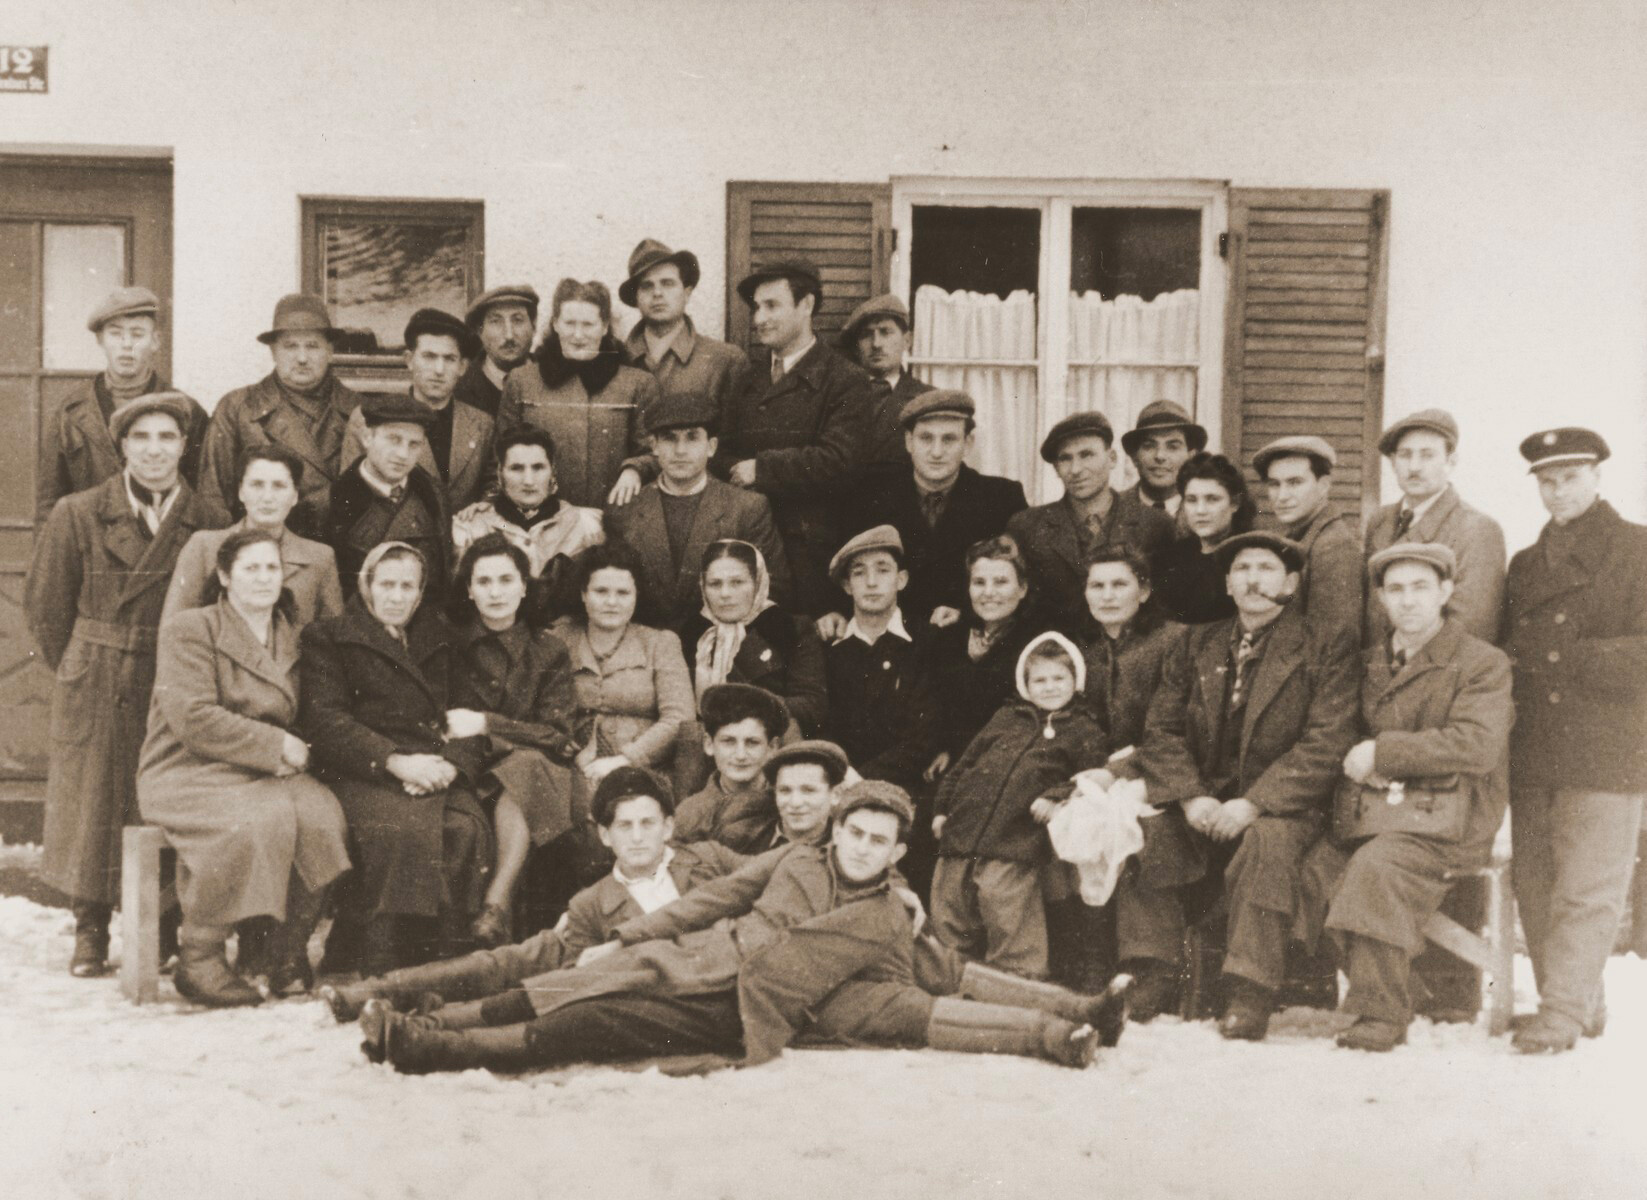 Group portrait of former Bielski partisans.